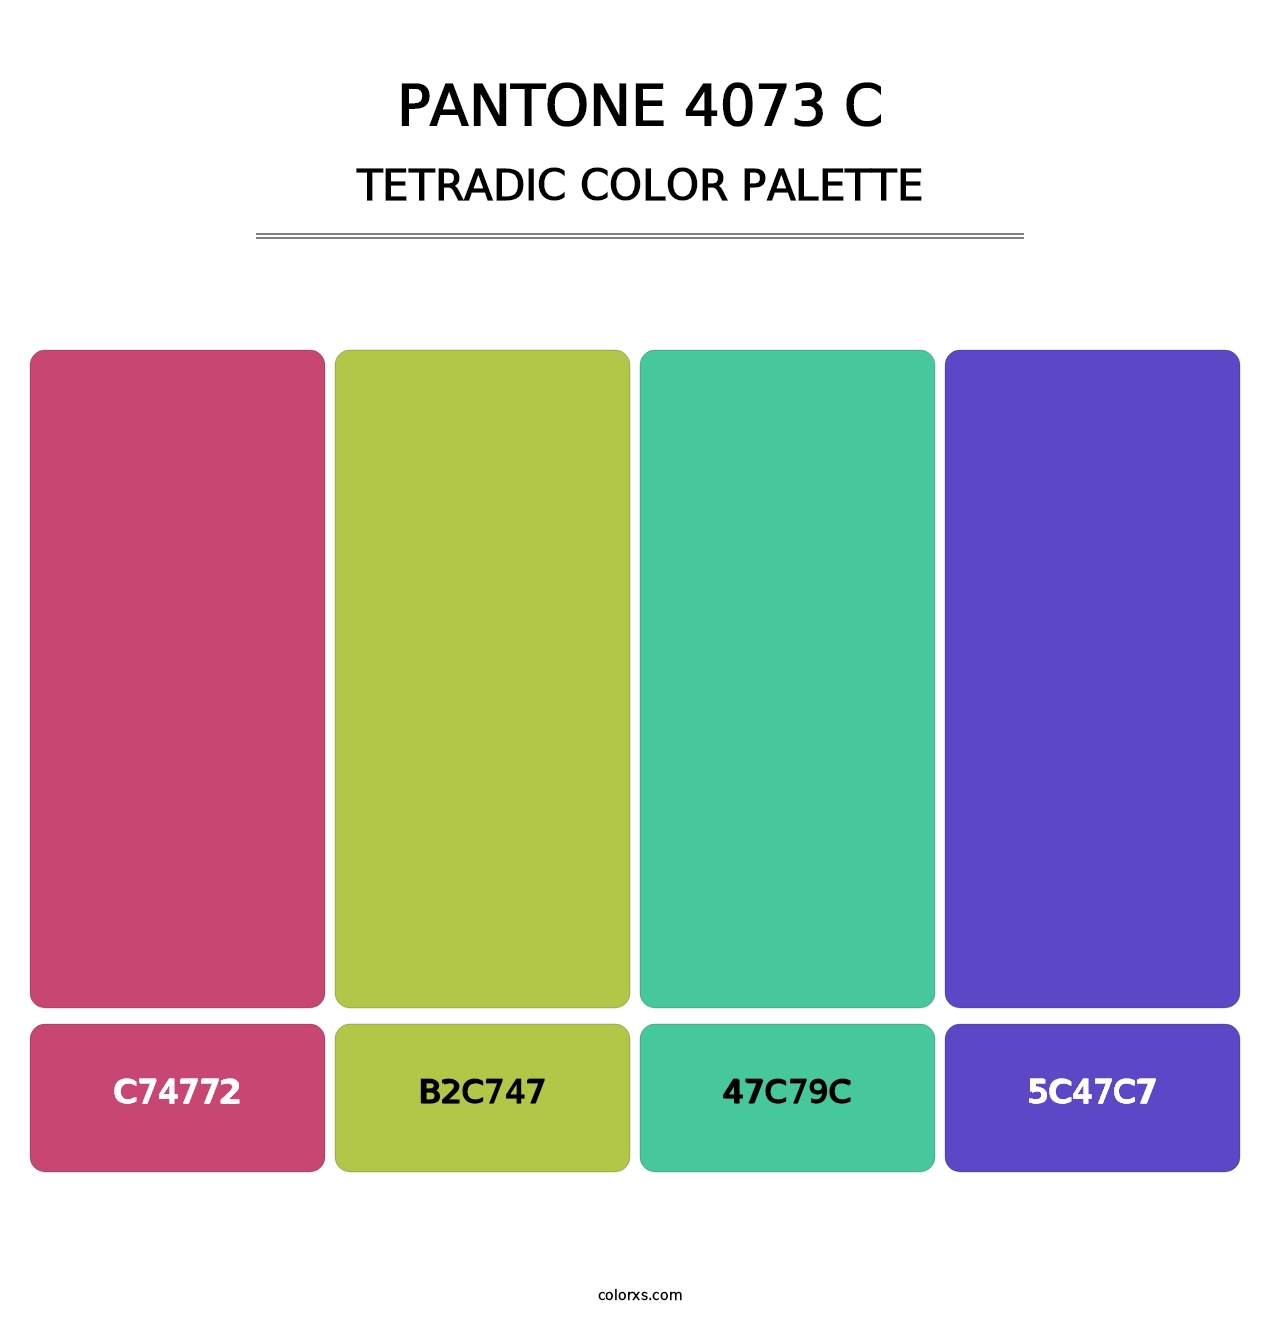 PANTONE 4073 C - Tetradic Color Palette